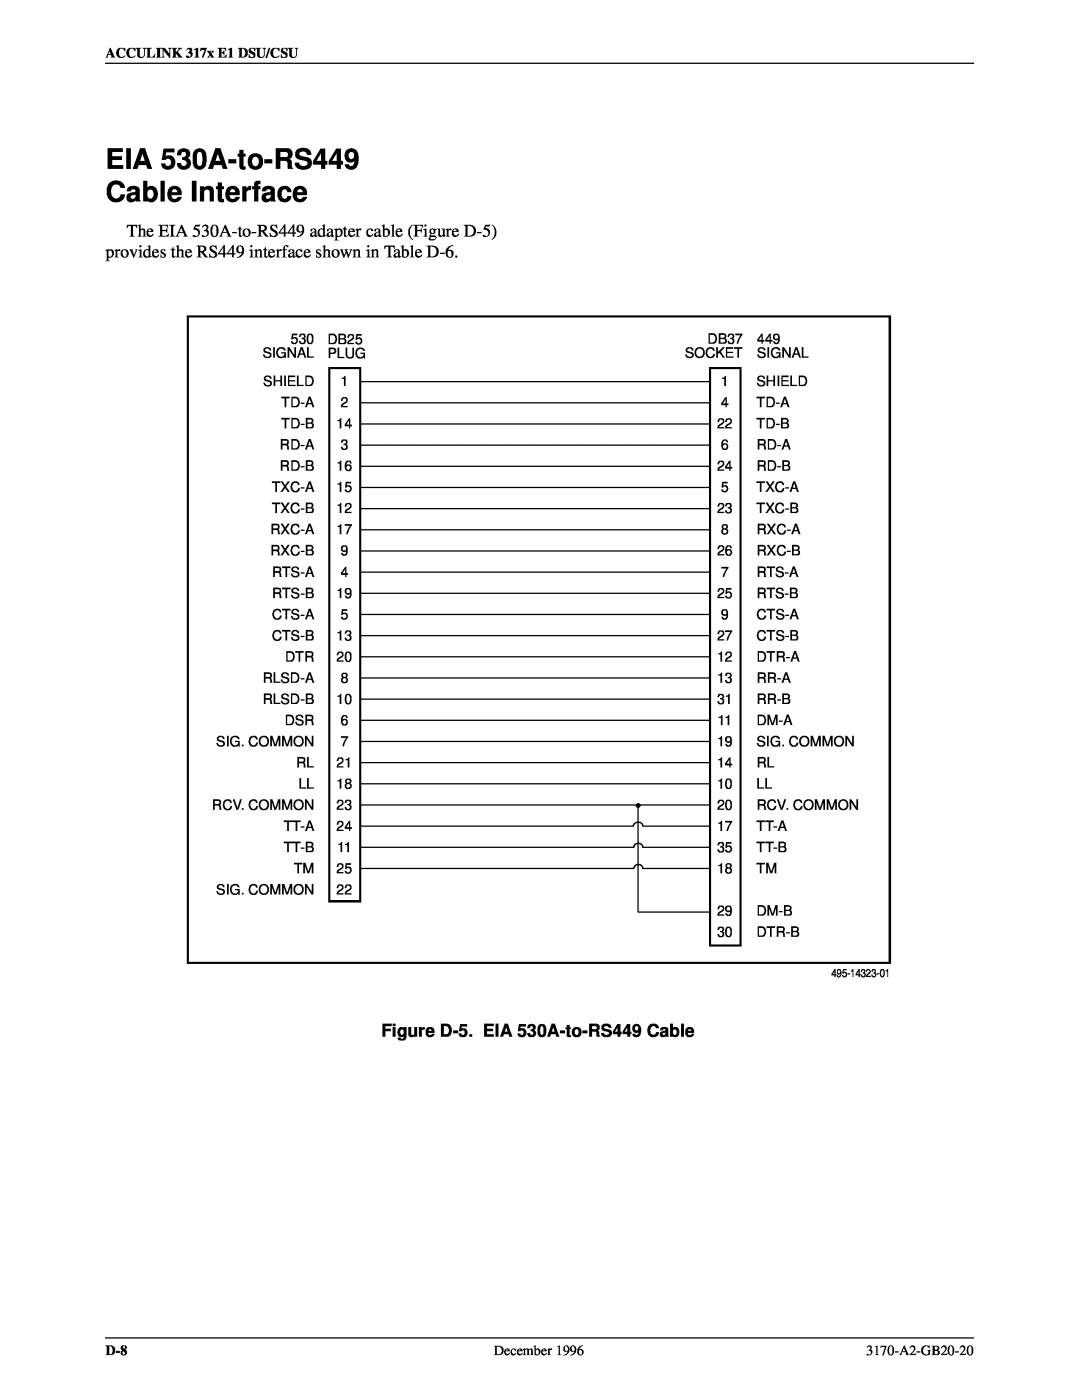 Paradyne manual EIA 530A-to-RS449 Cable Interface, Figure D-5. EIA 530A-to-RS449 Cable, ACCULINK 317x E1 DSU/CSU 